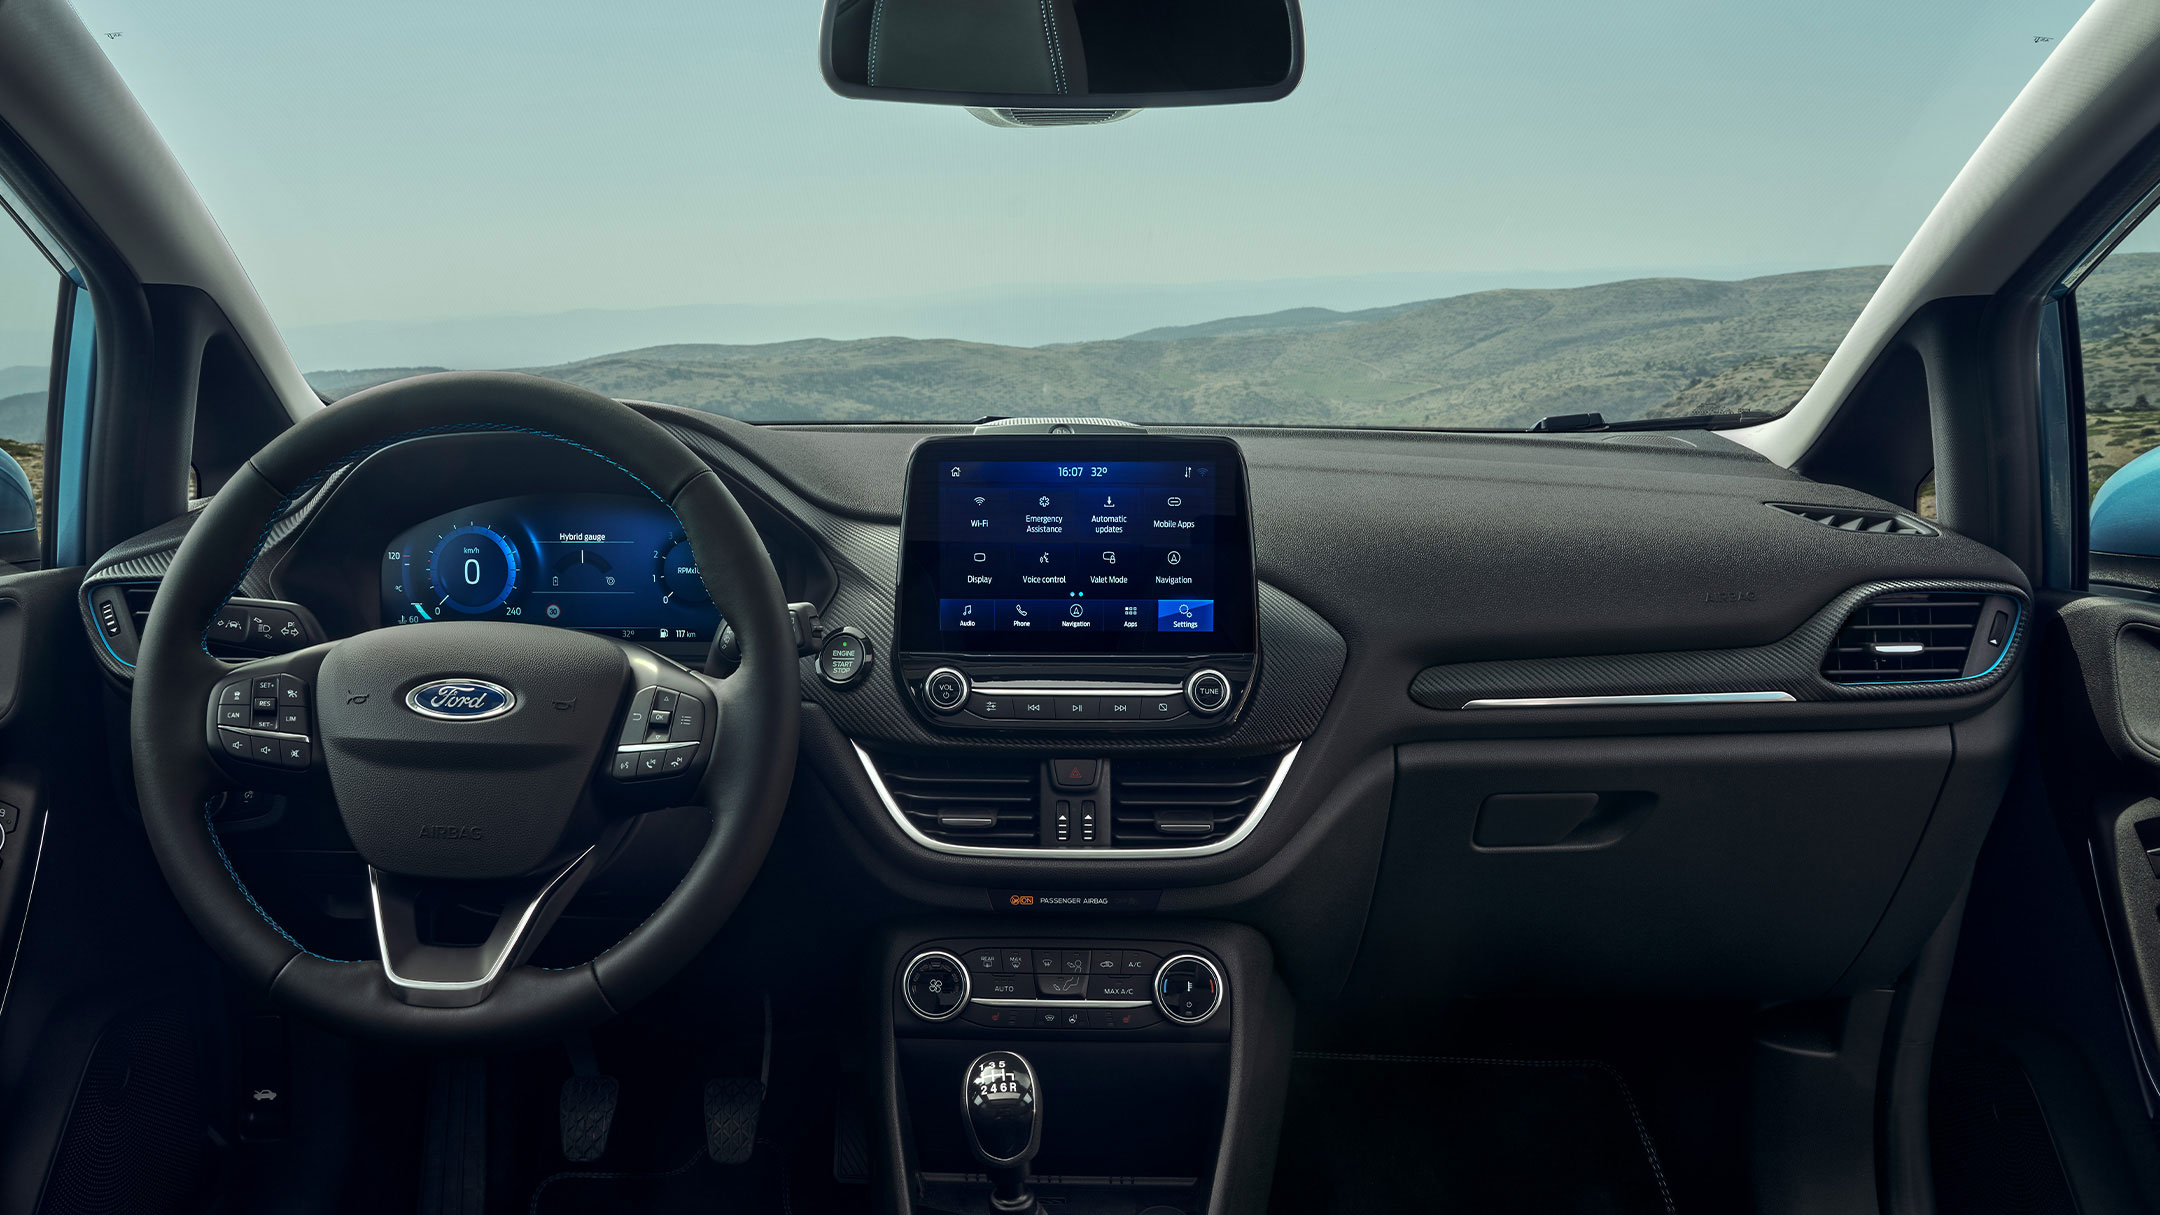 Ford Fiesta interior dashboard view